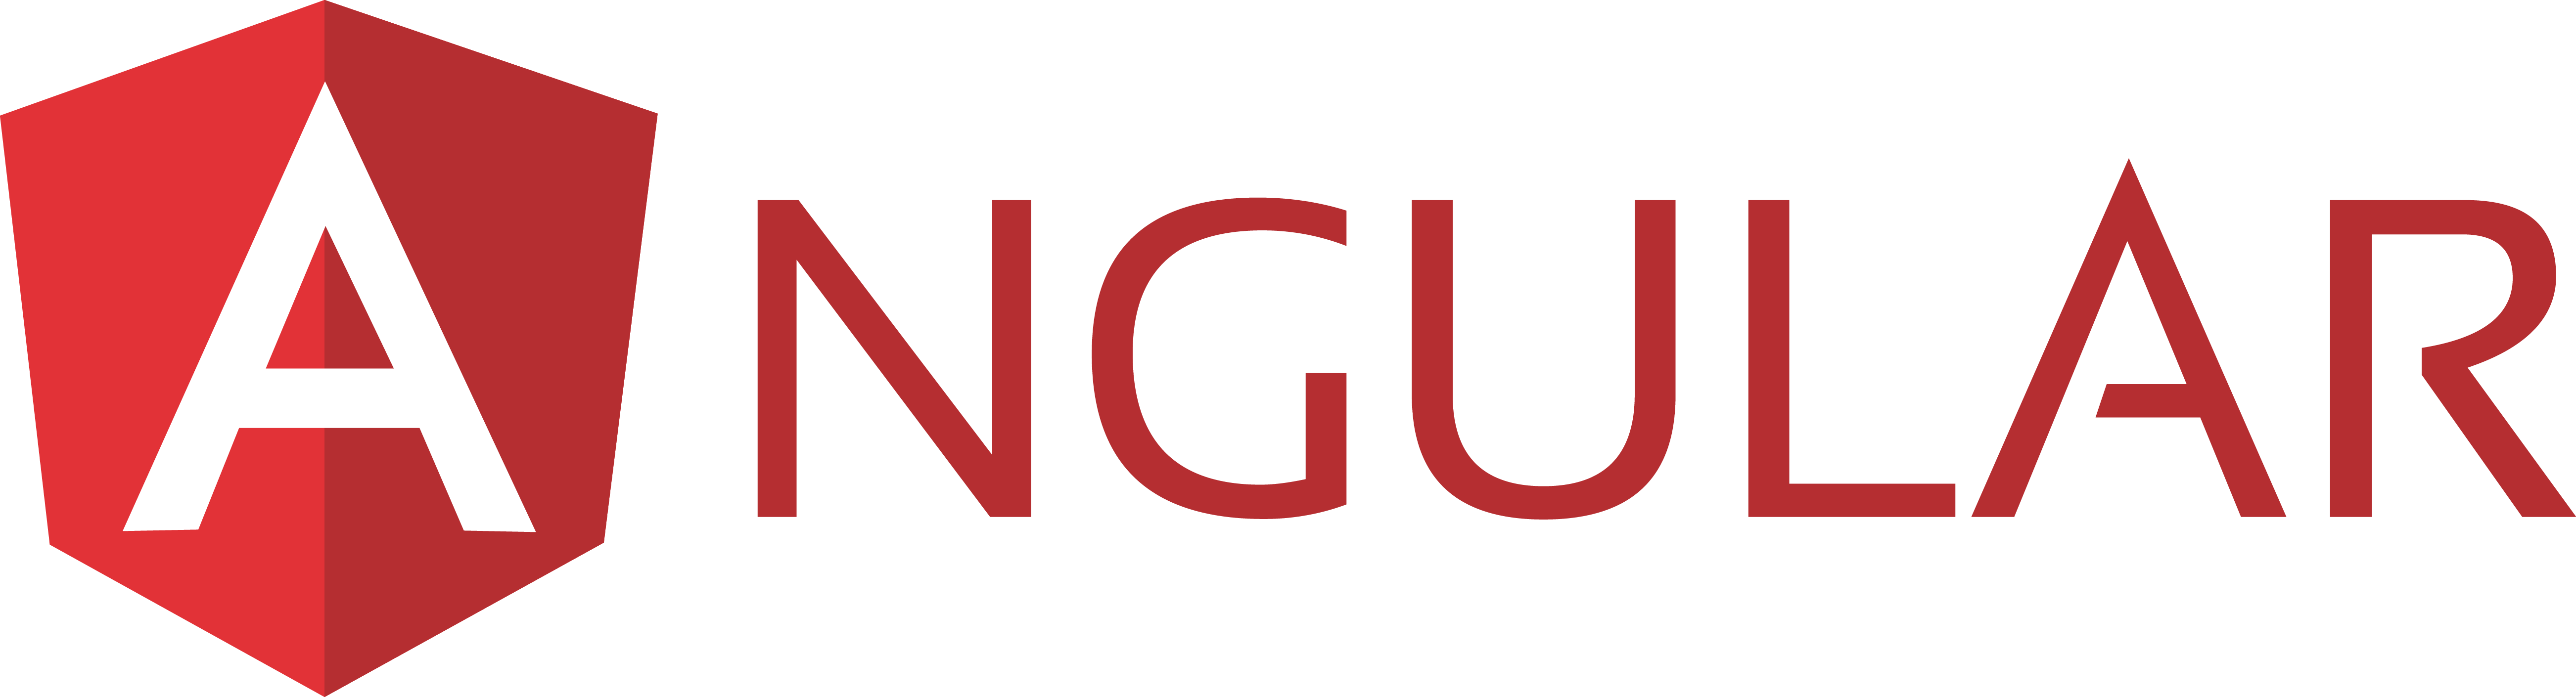 angular_logo